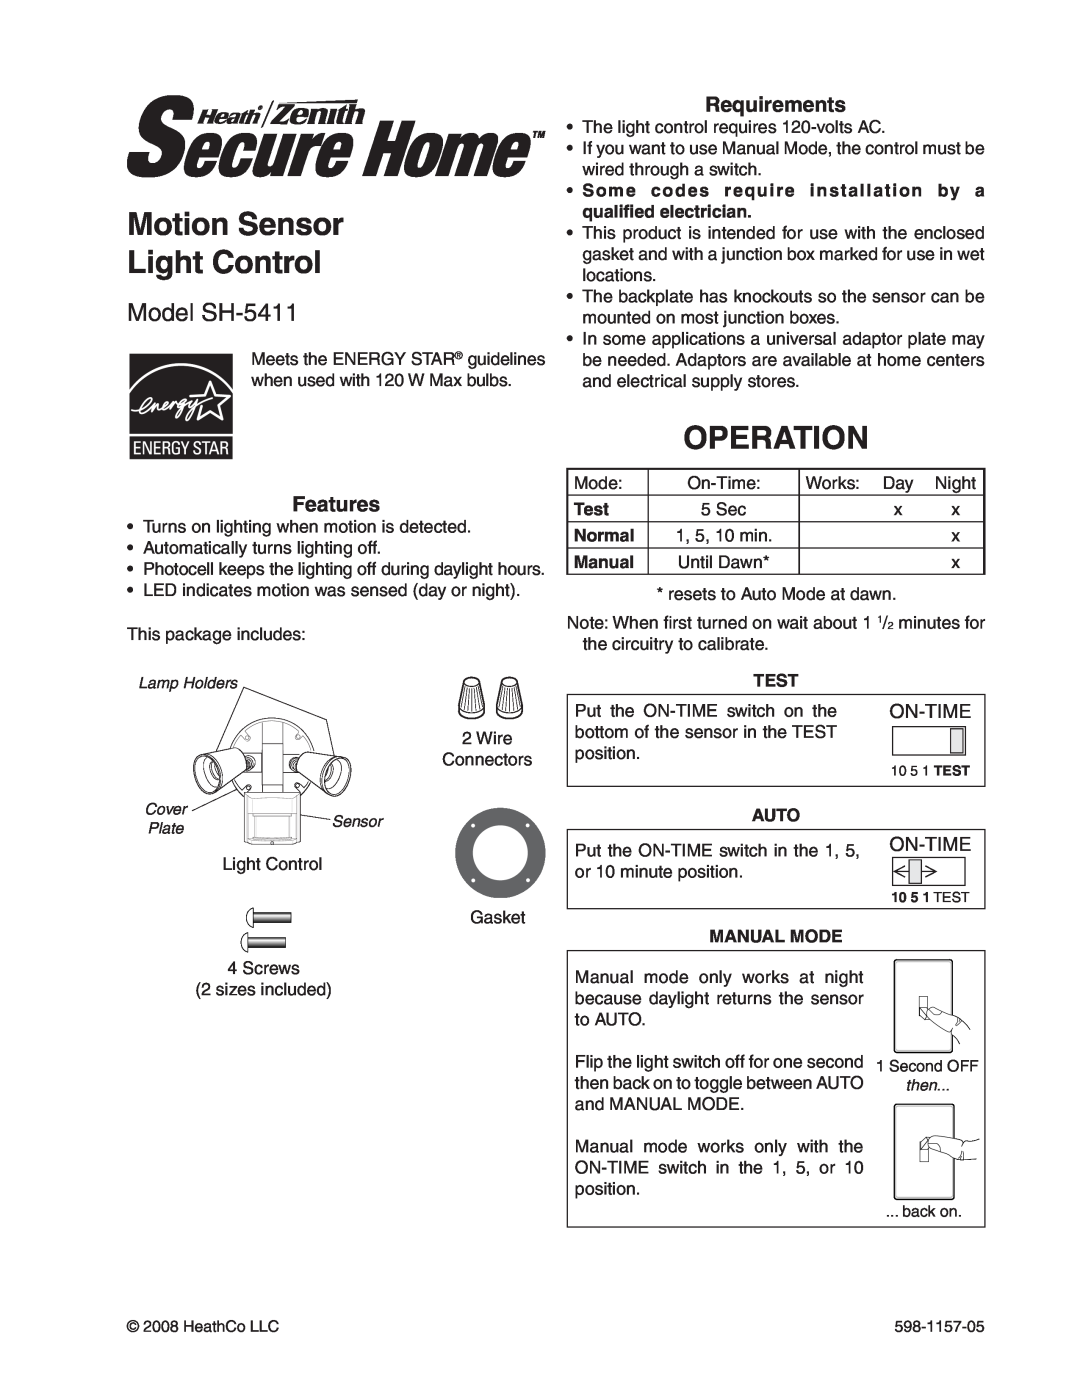 Heath Zenith manual Motion Sensor Light Control, Operation, Model SH-5411, On-Time, Test, Normal, Manual, Auto 